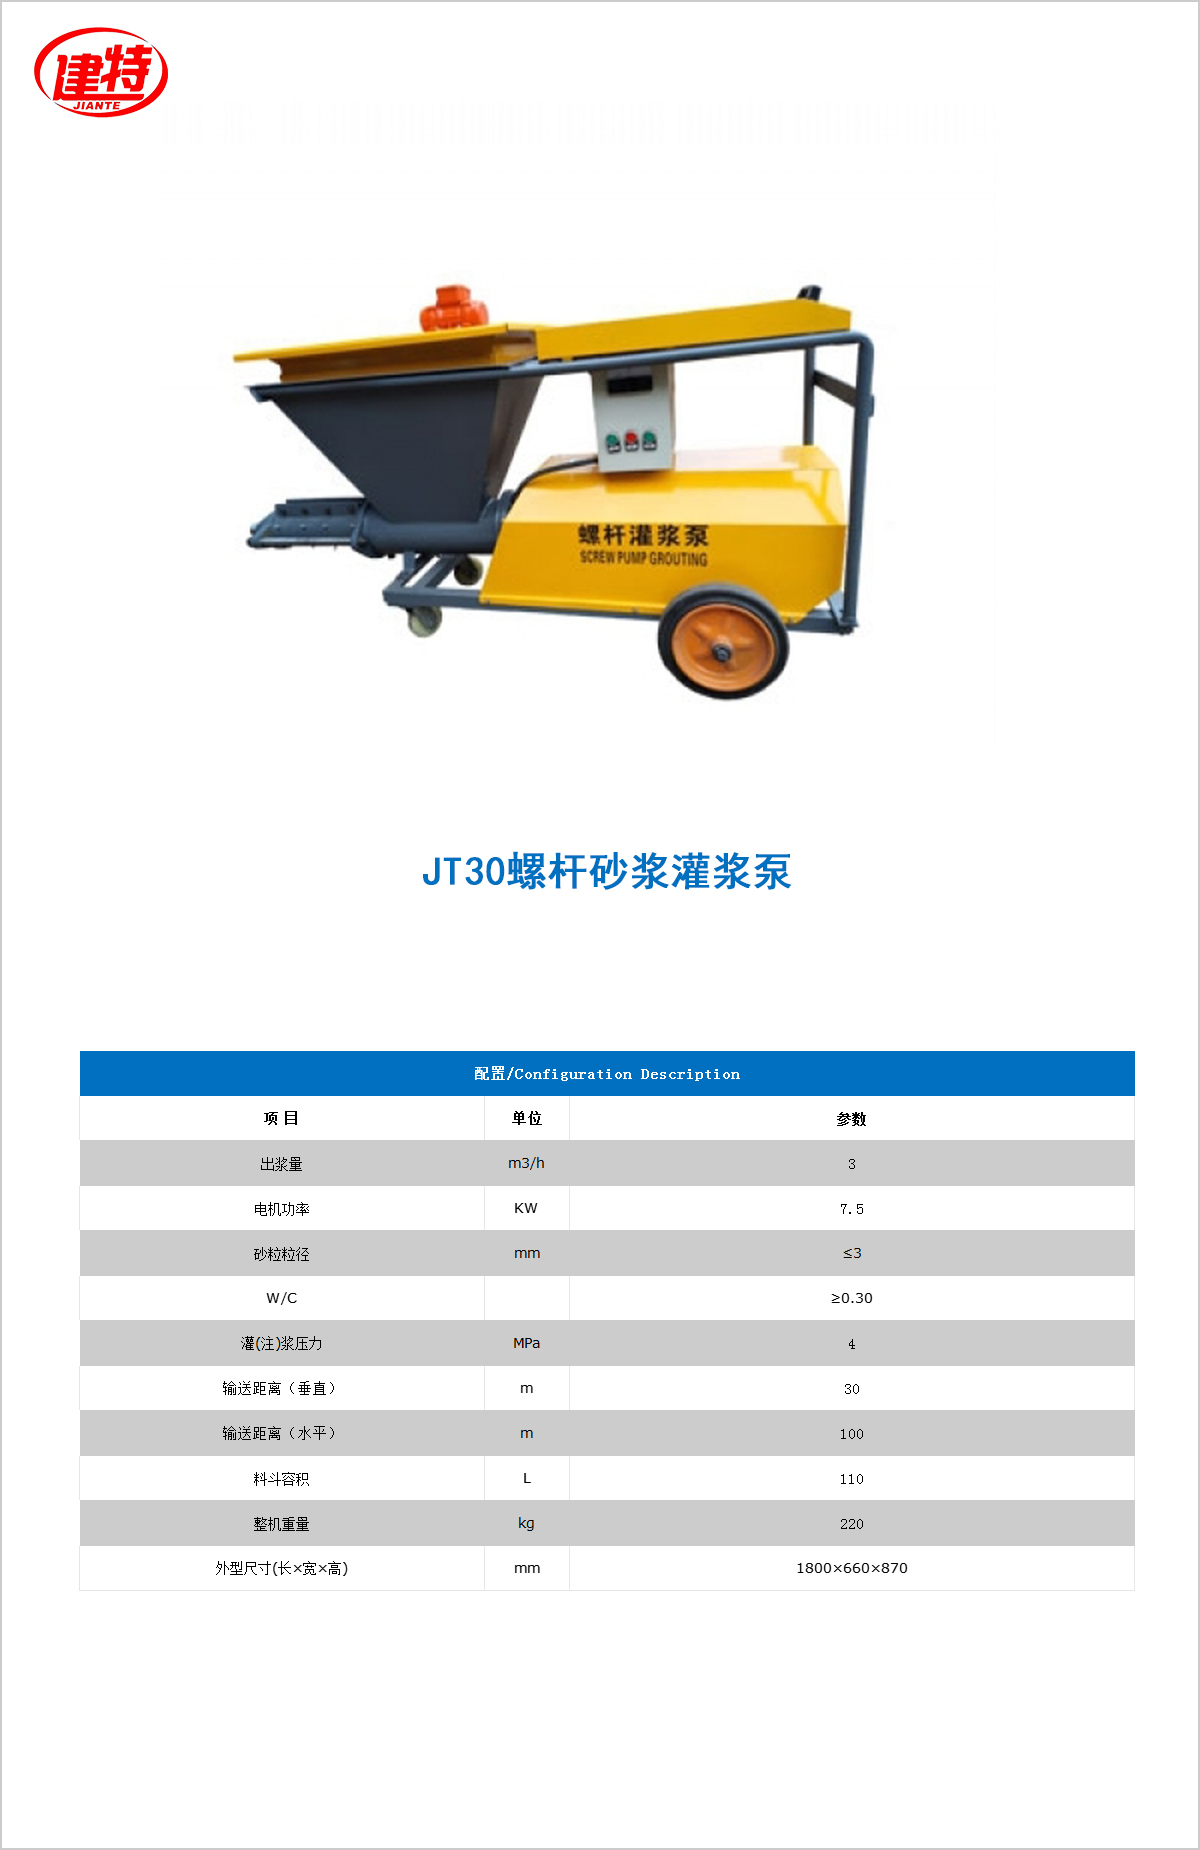 02-JT30螺杆砂浆灌浆泵